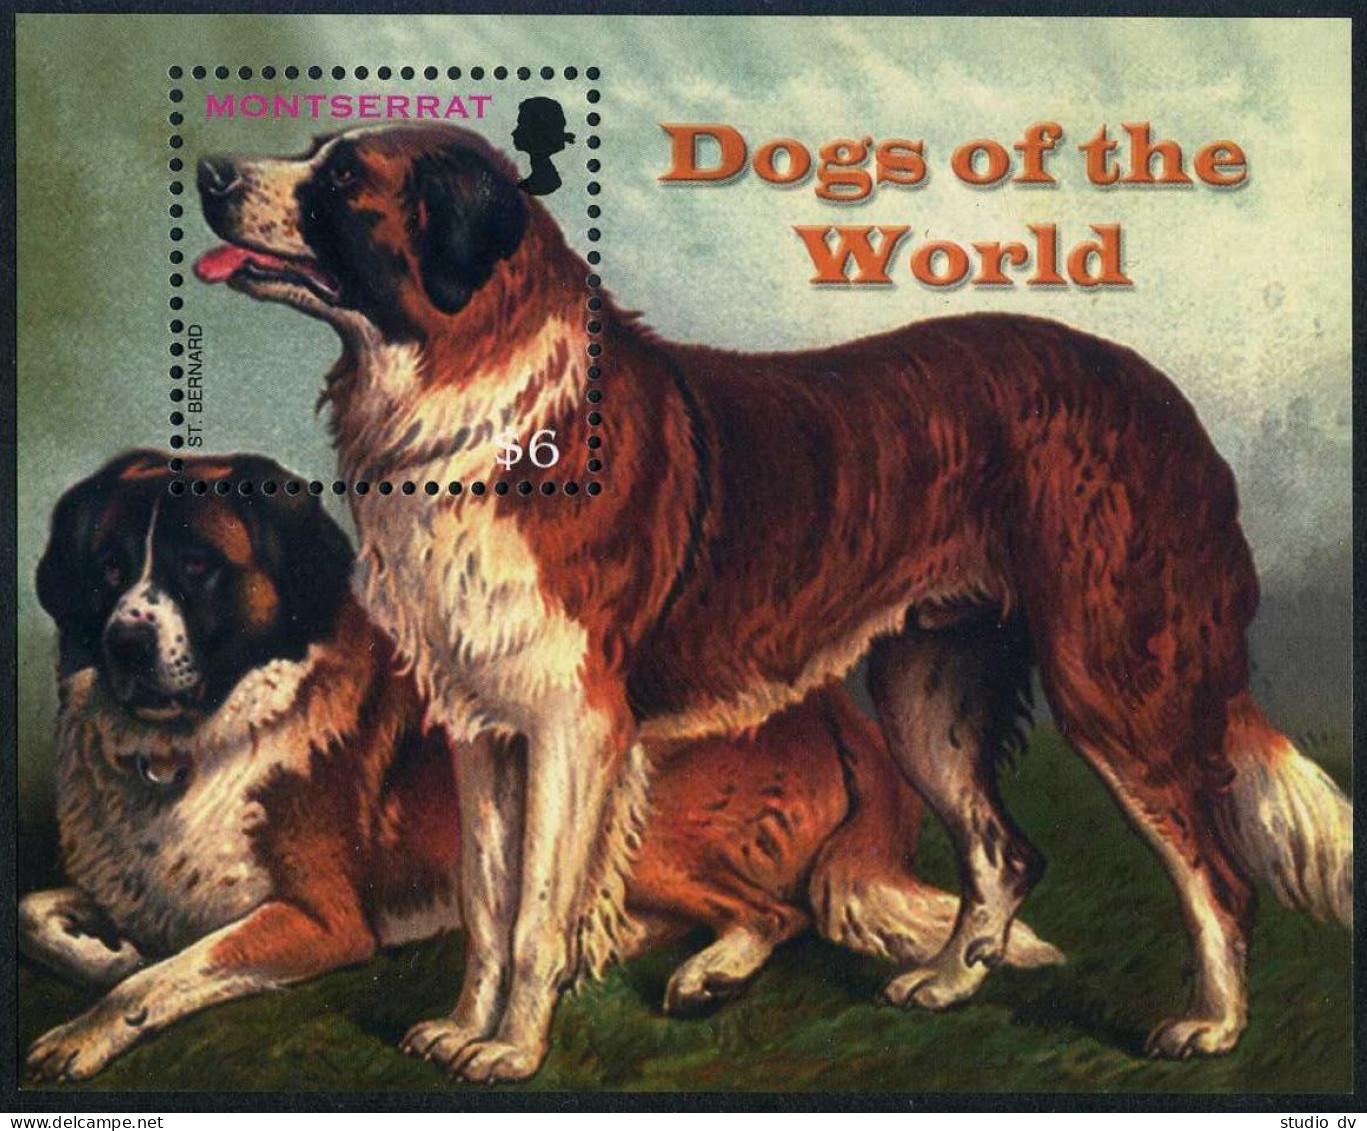 Montserrat 1154-1157,1158, MNH. Dogs 2006: Rottweiler, Boxer, Corgi, Great Dane, - Montserrat